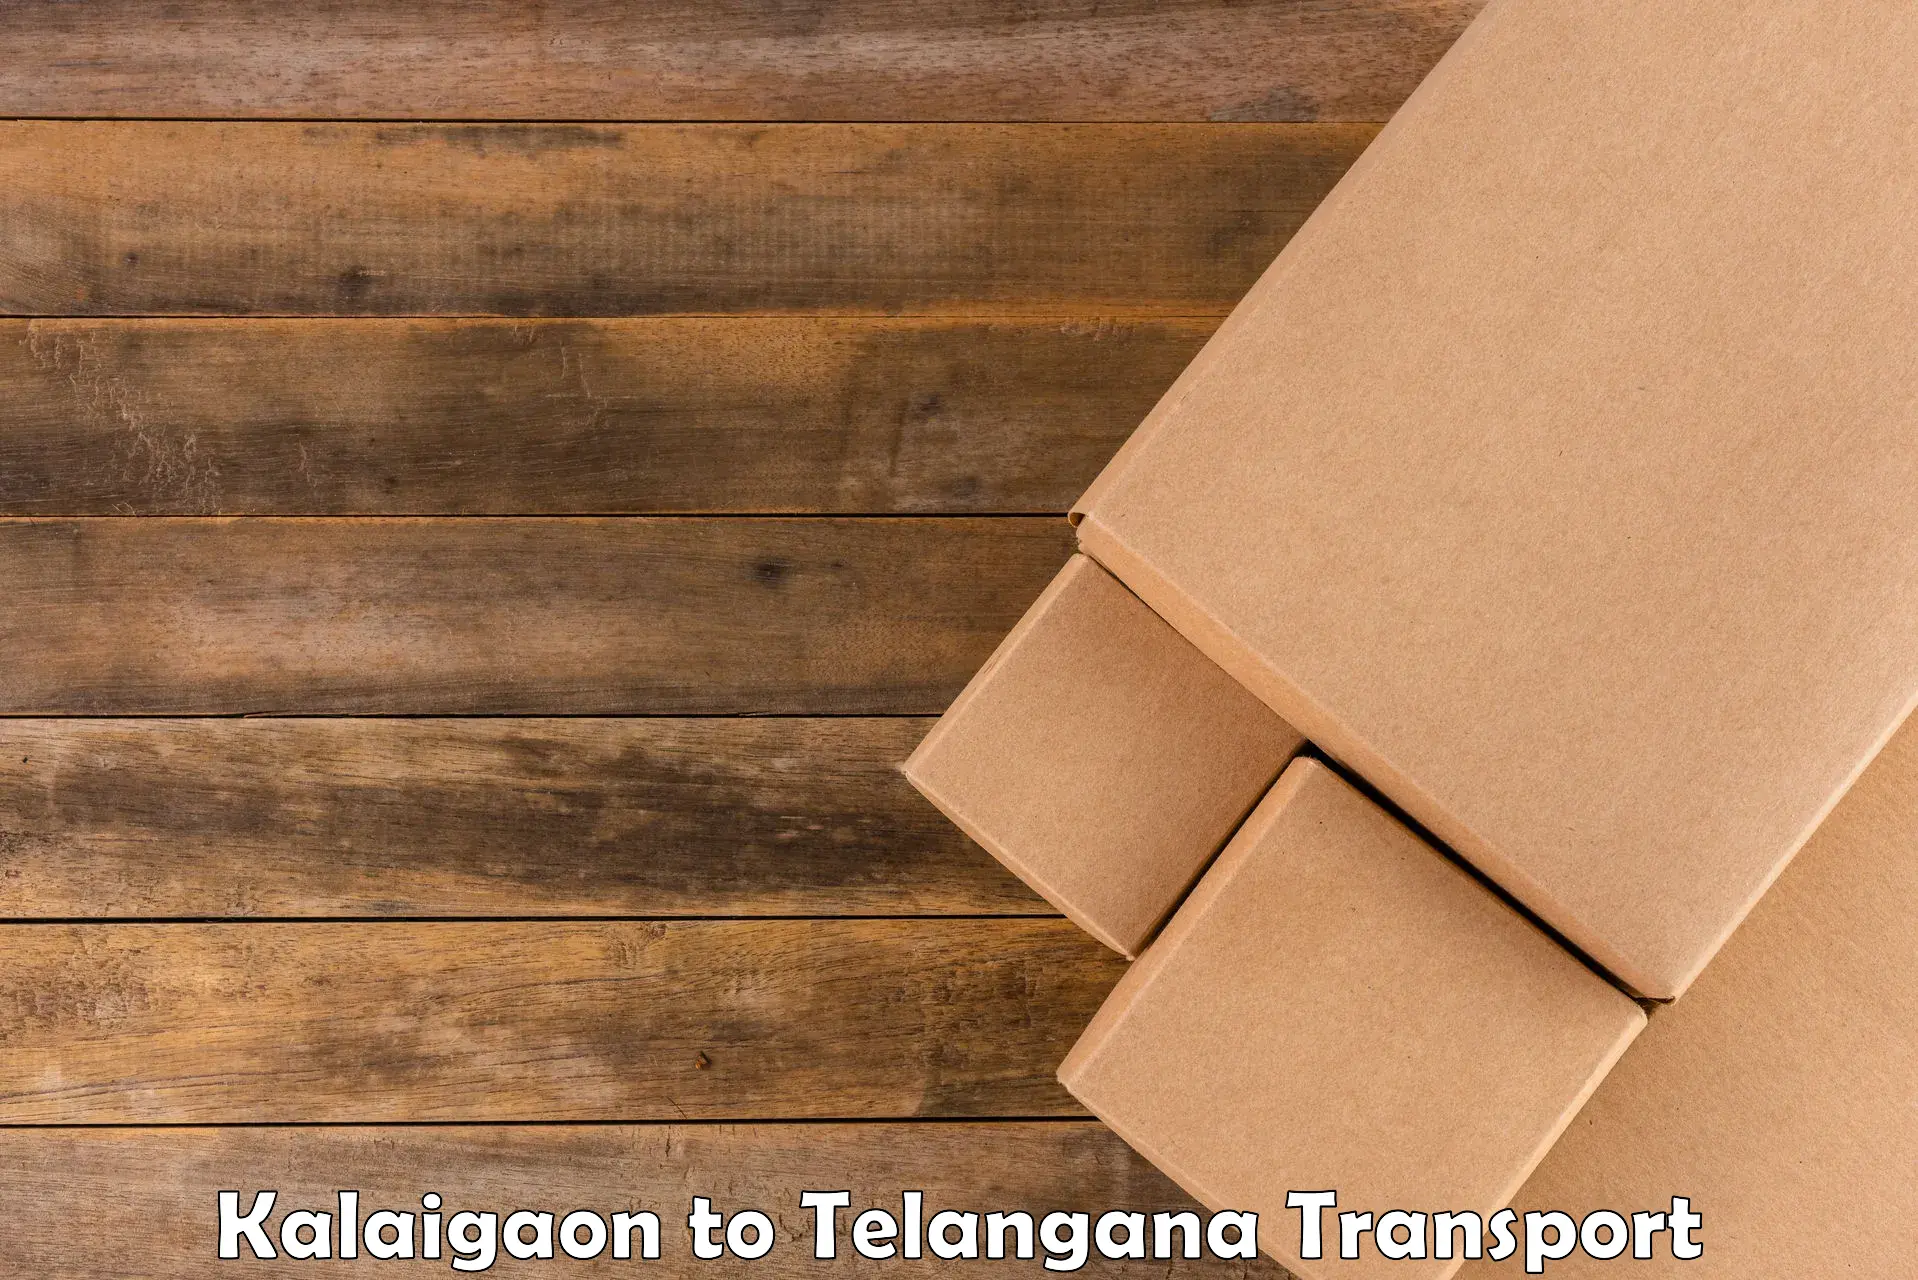 Daily parcel service transport in Kalaigaon to Mahabubnagar